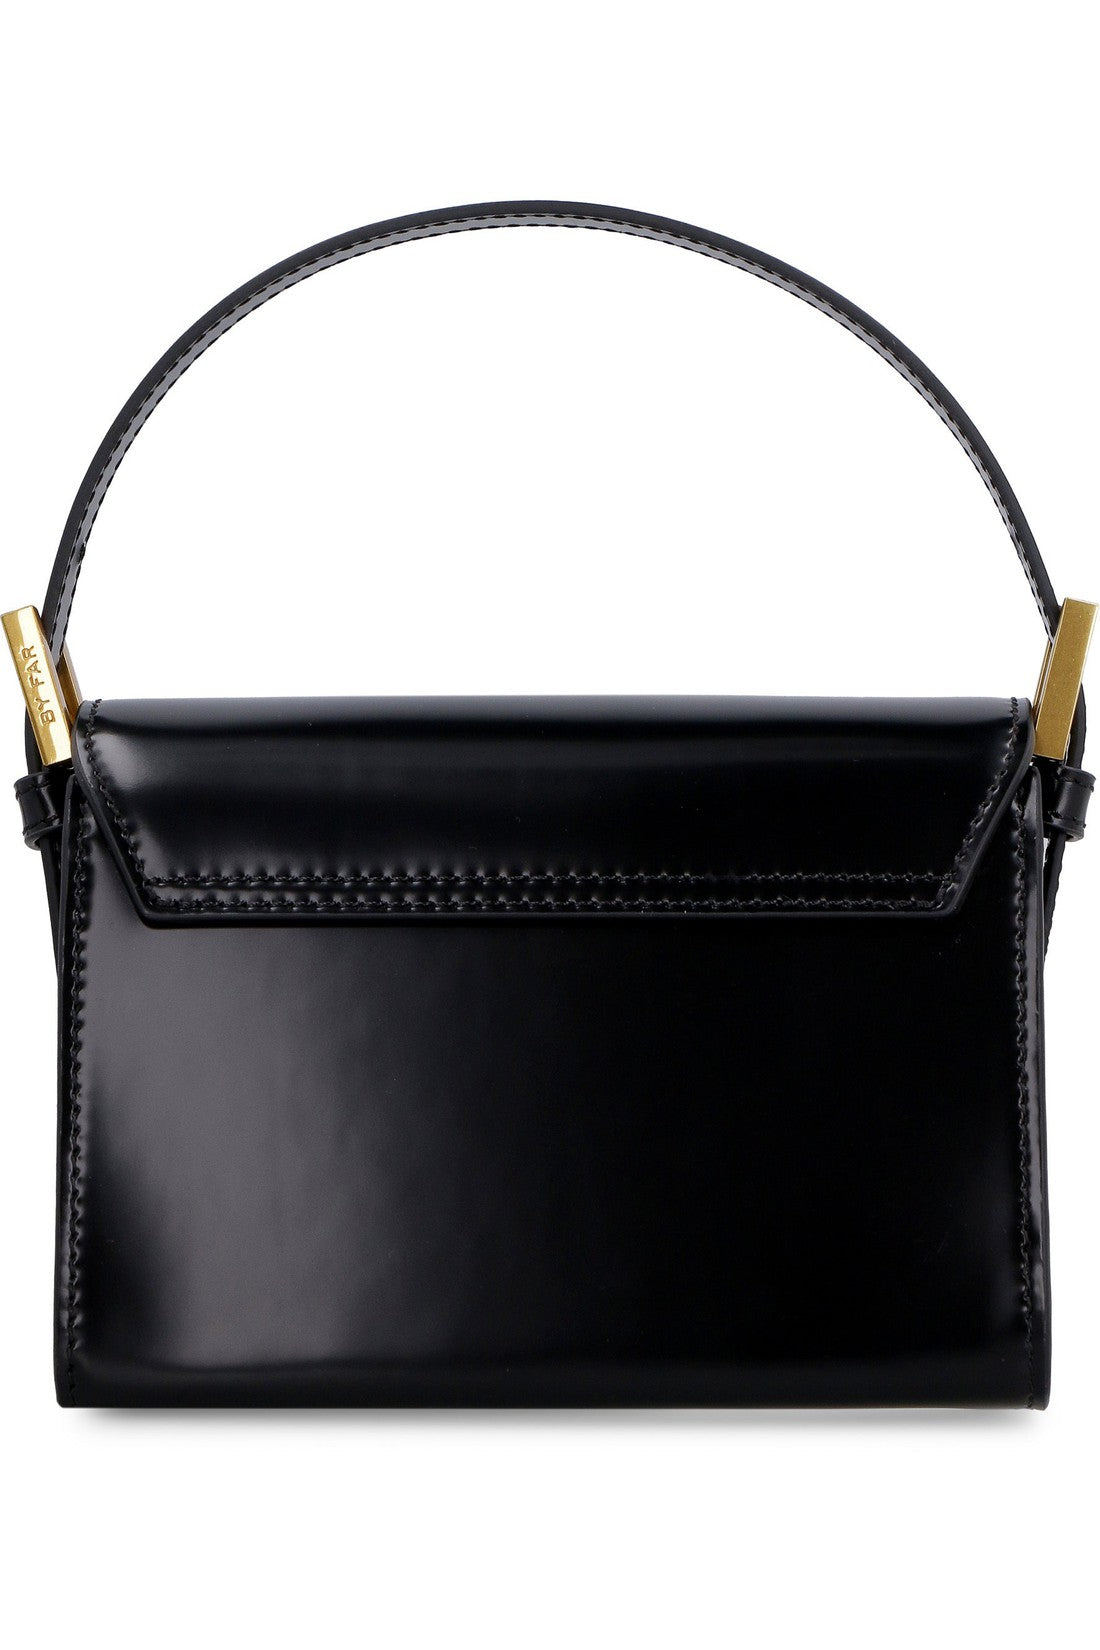 BY FAR-OUTLET-SALE-Fran patent leather handbag-ARCHIVIST